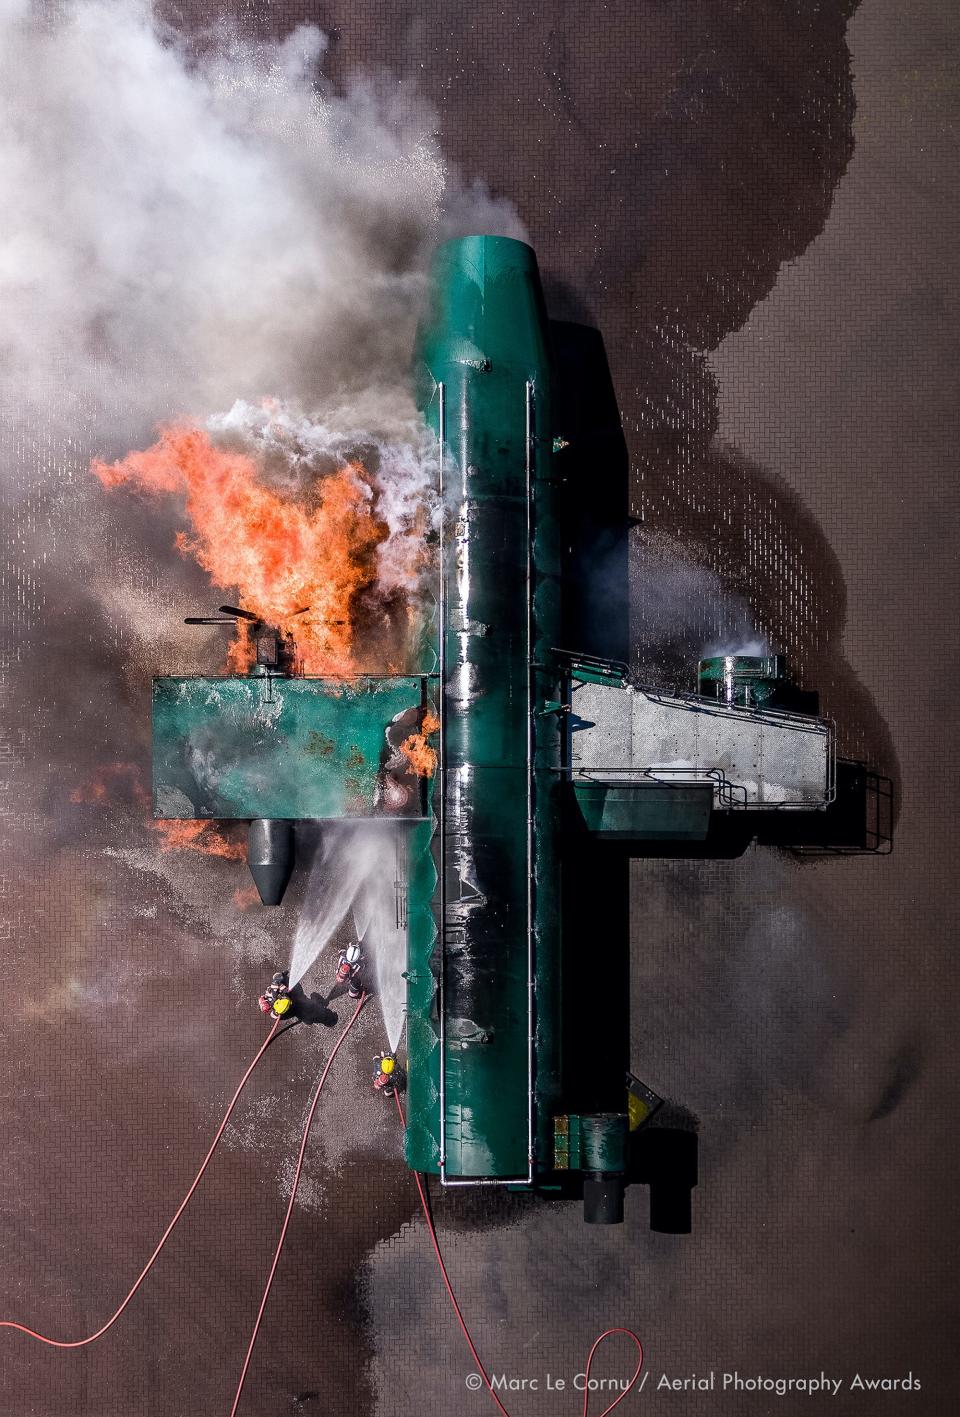 Fire Attack_Marc Le Cornu_Aerial Photography Awards 2020 copy